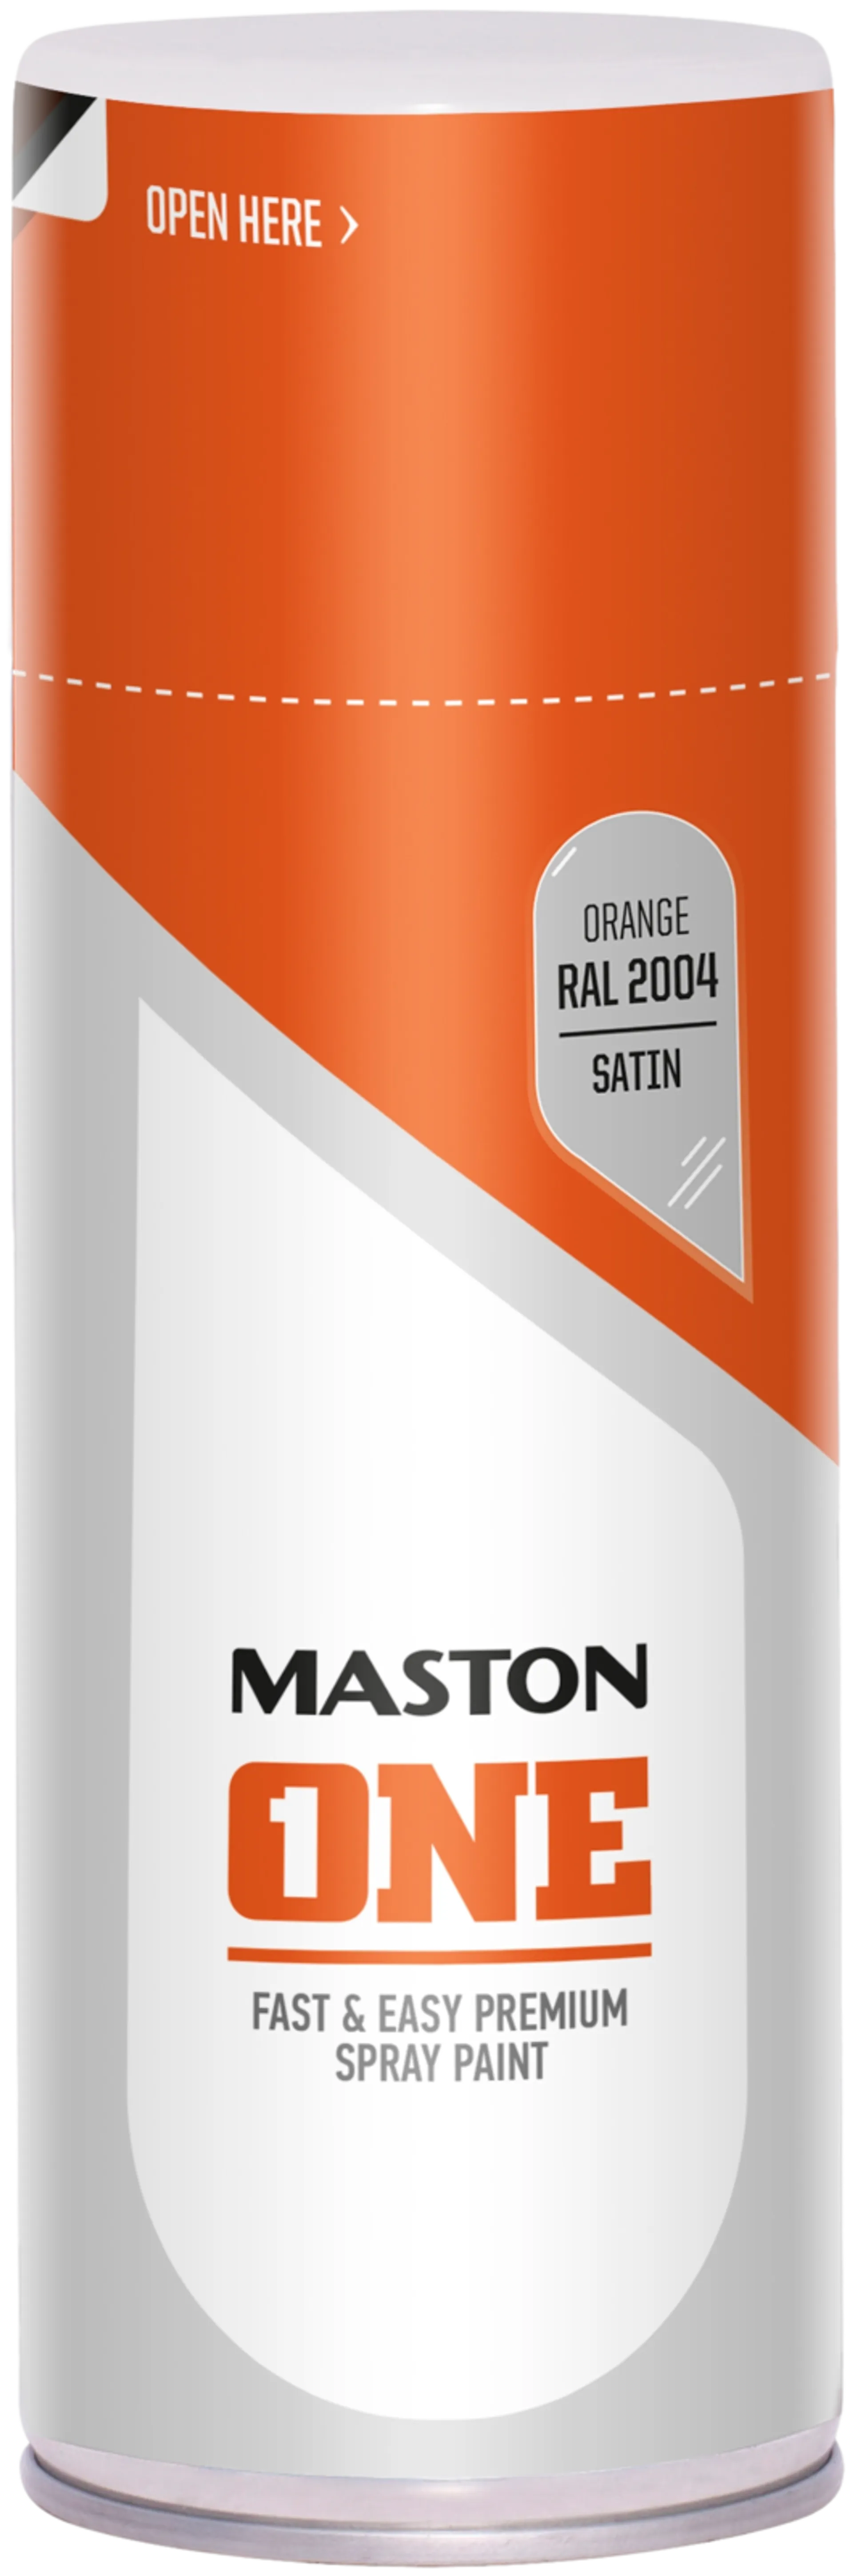 Maston 400ml One spraymaali satiini oranssi